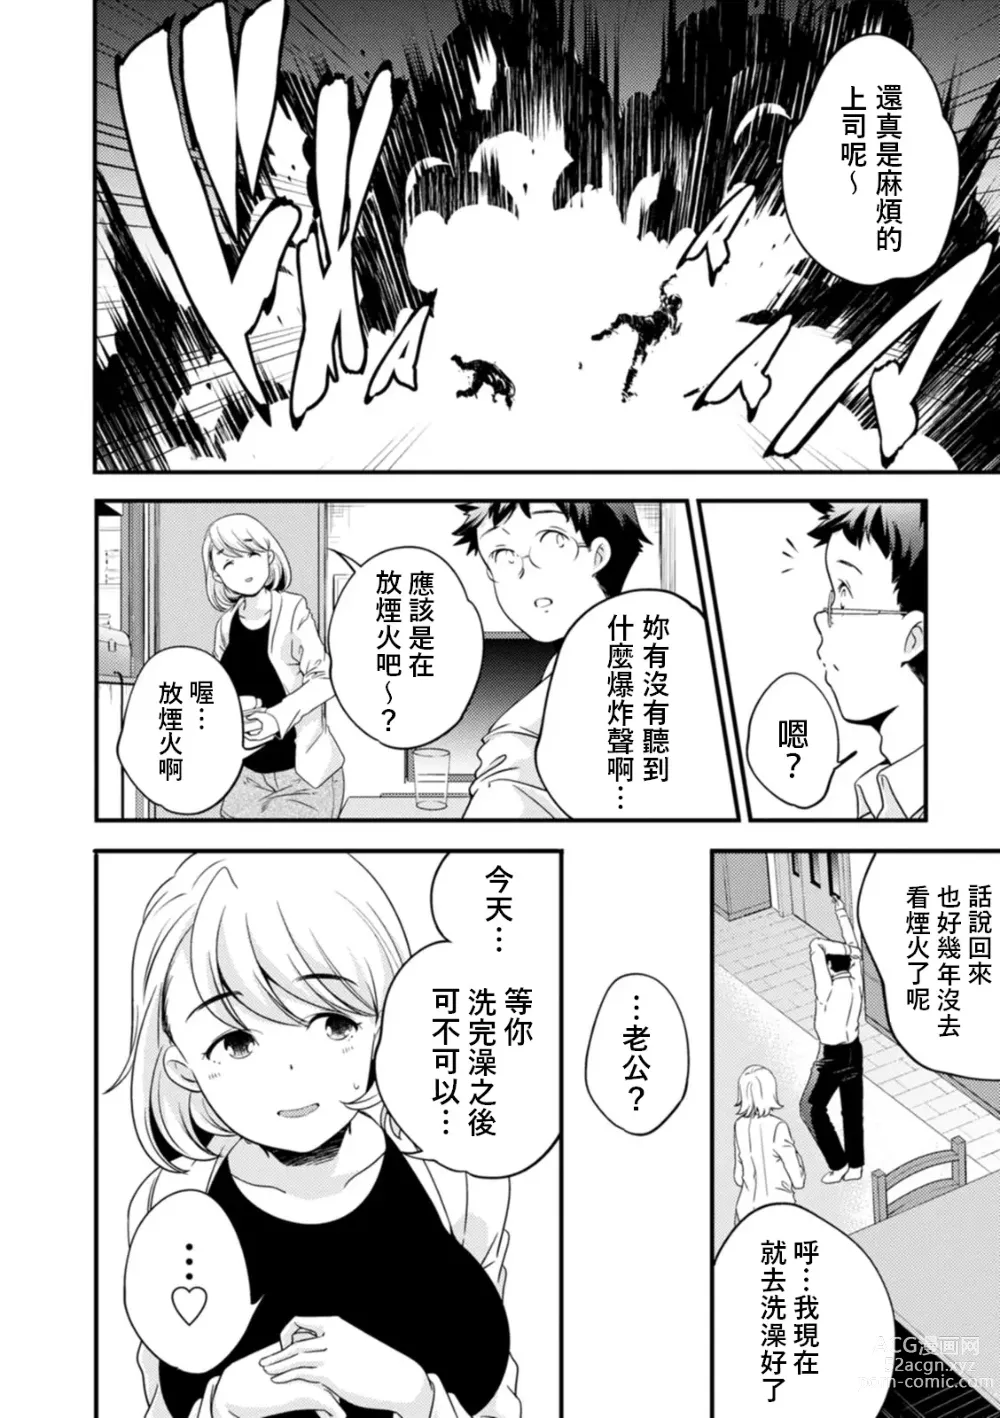 Page 4 of manga Full Metal Mama